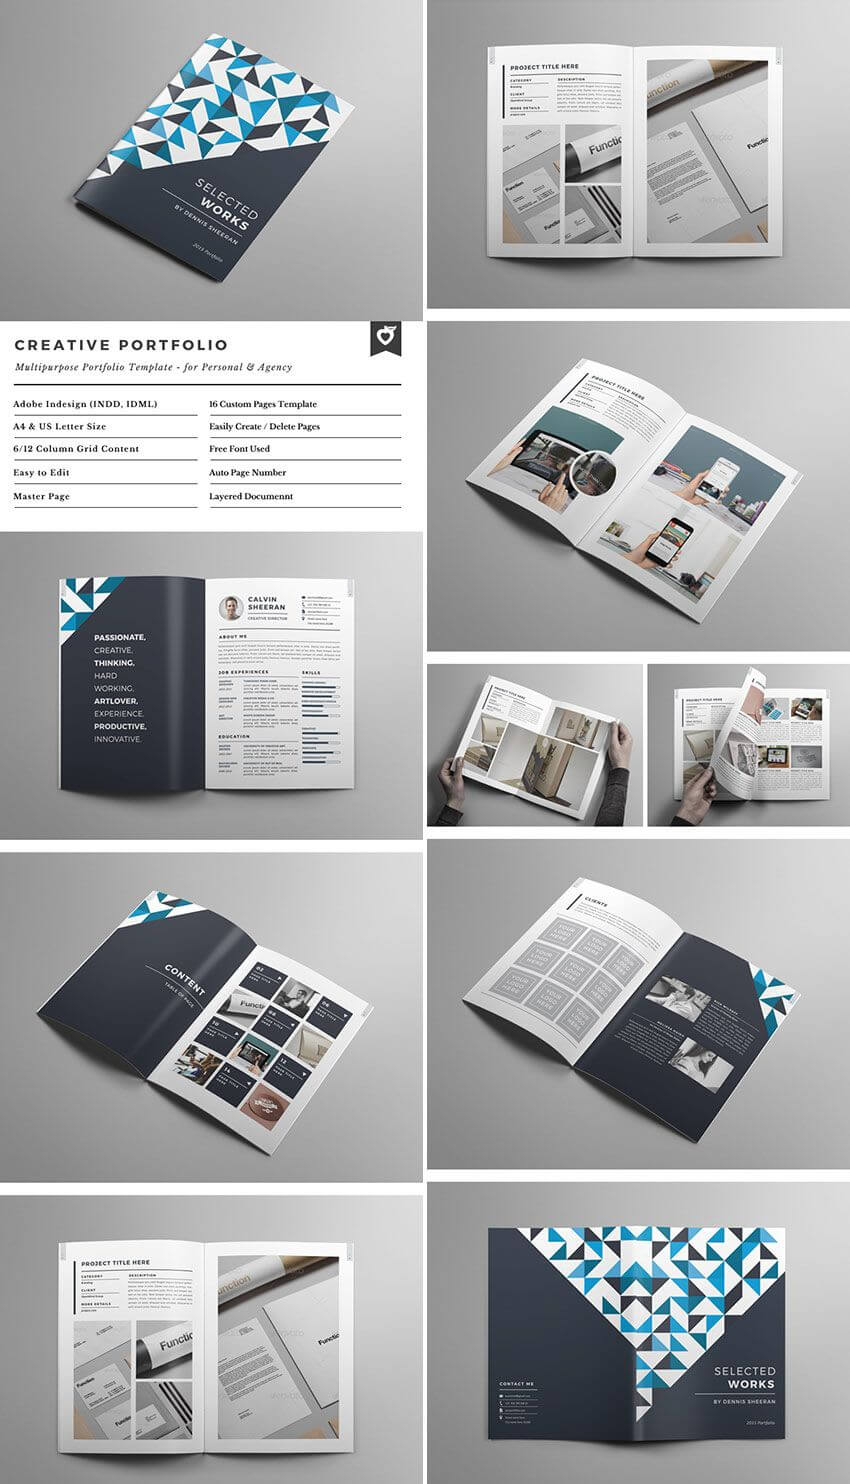 Creative Portfolio Brochure Indd | Indesign Brochure Inside Adobe Indesign Brochure Templates